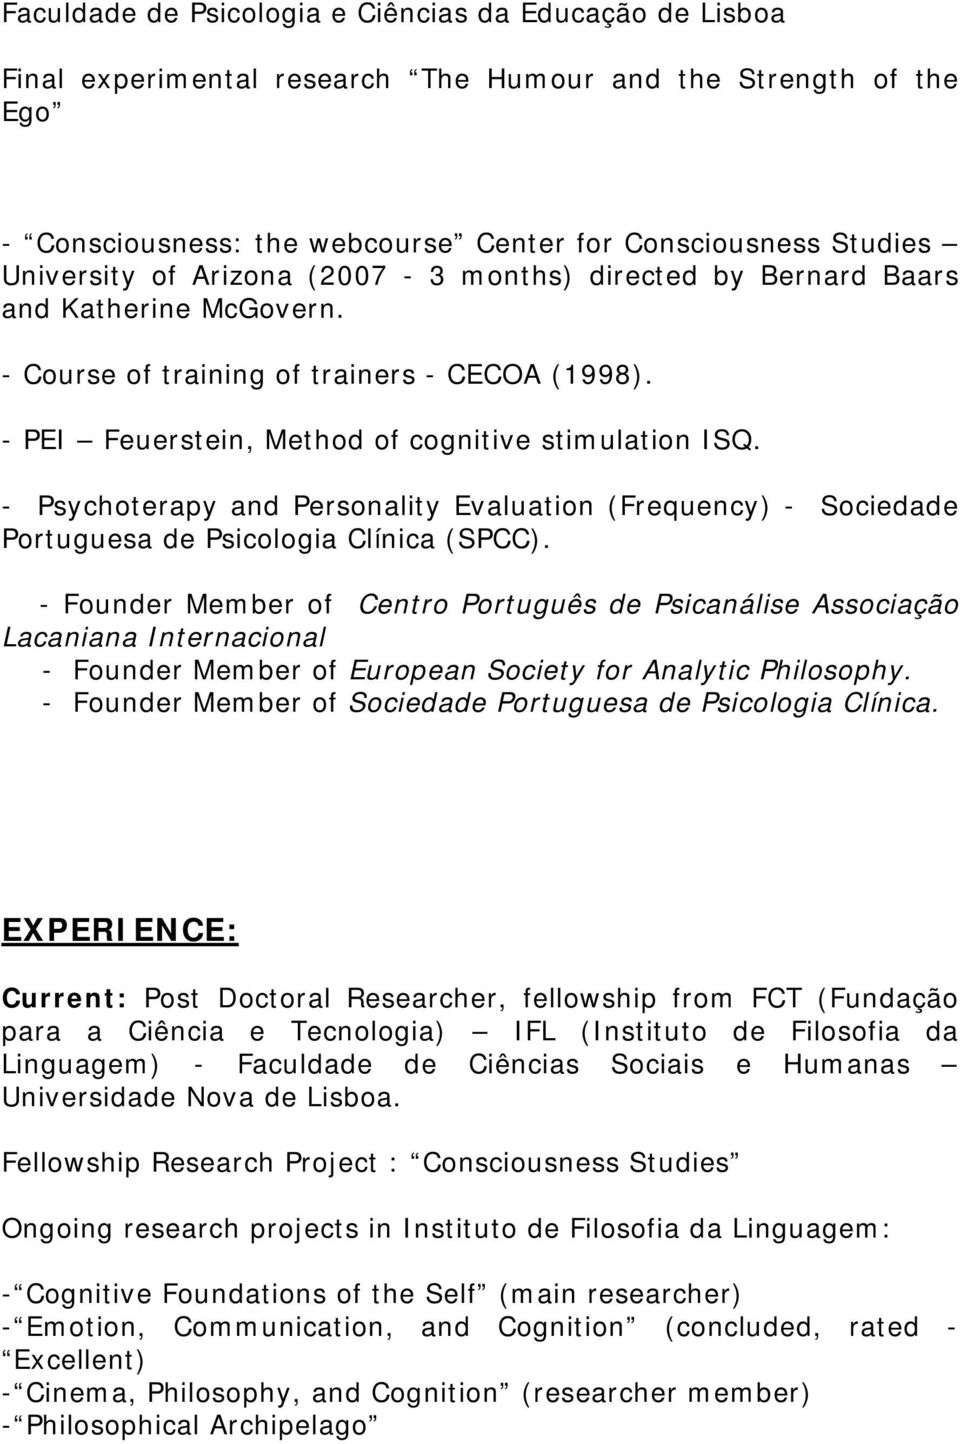 - Psychoterapy and Personality Evaluation (Frequency) - Sociedade Portuguesa de Psicologia Clínica (SPCC).